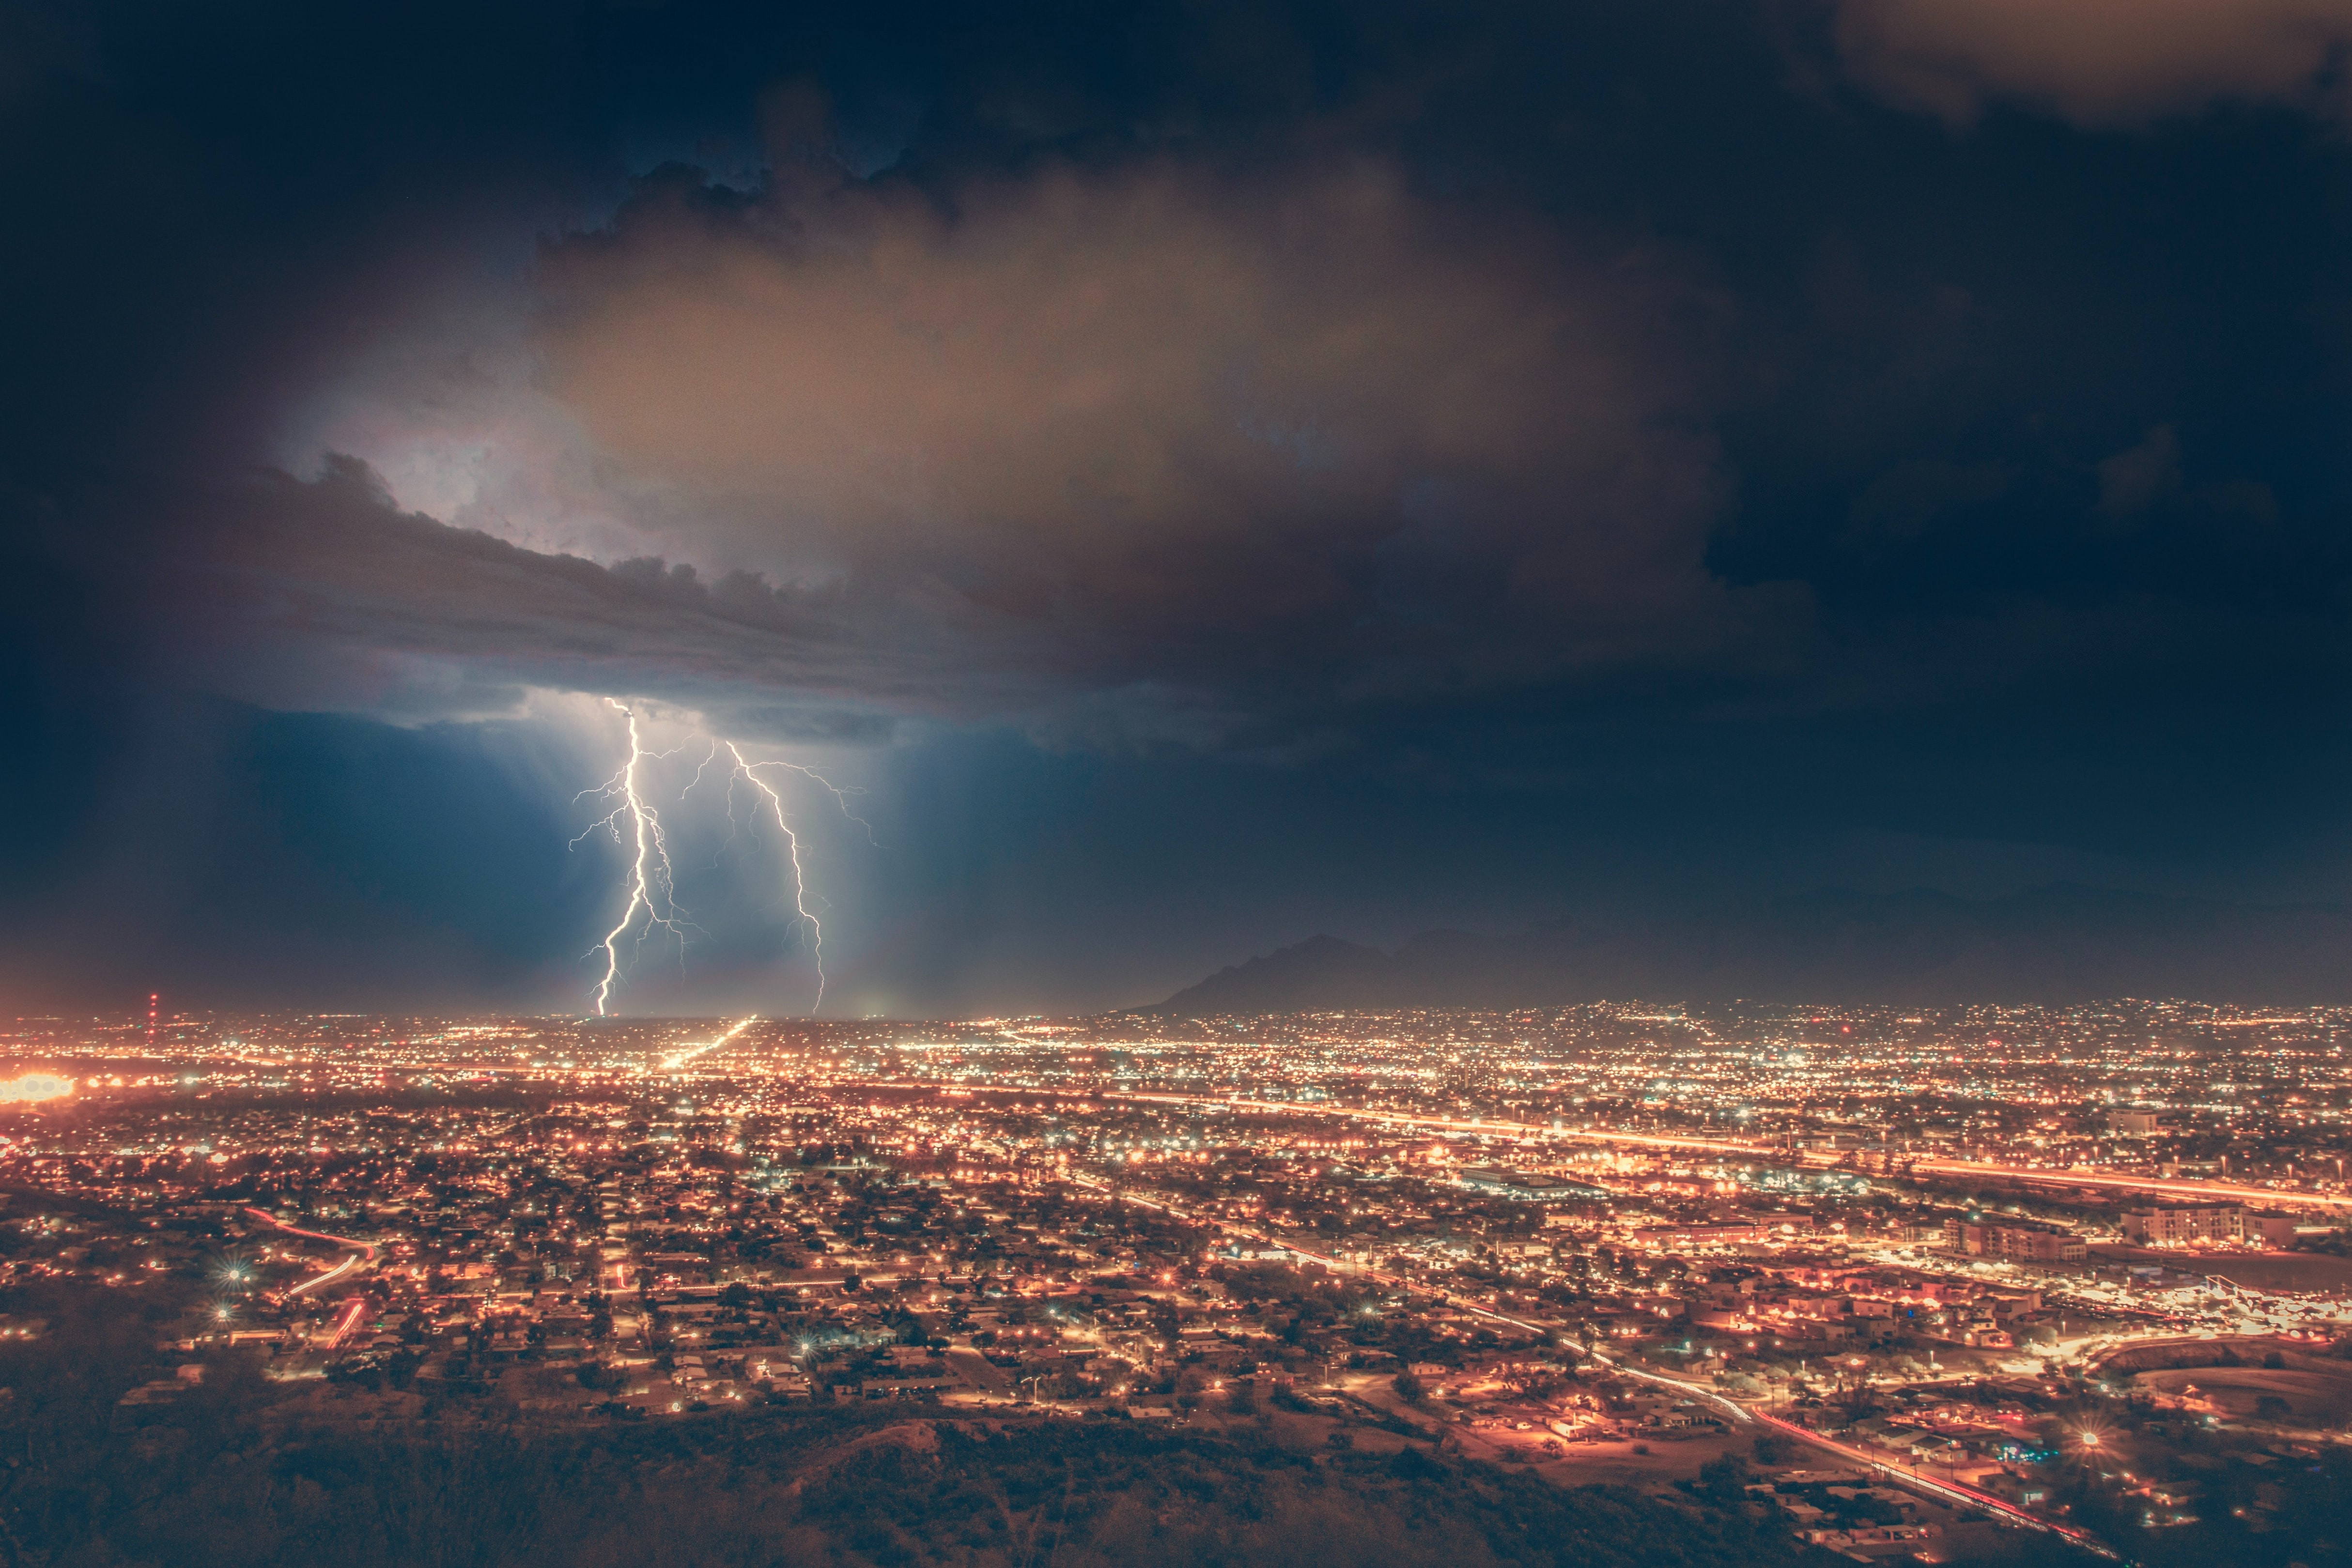 Lightning over large city; image by Michael D, via Unsplash.com.